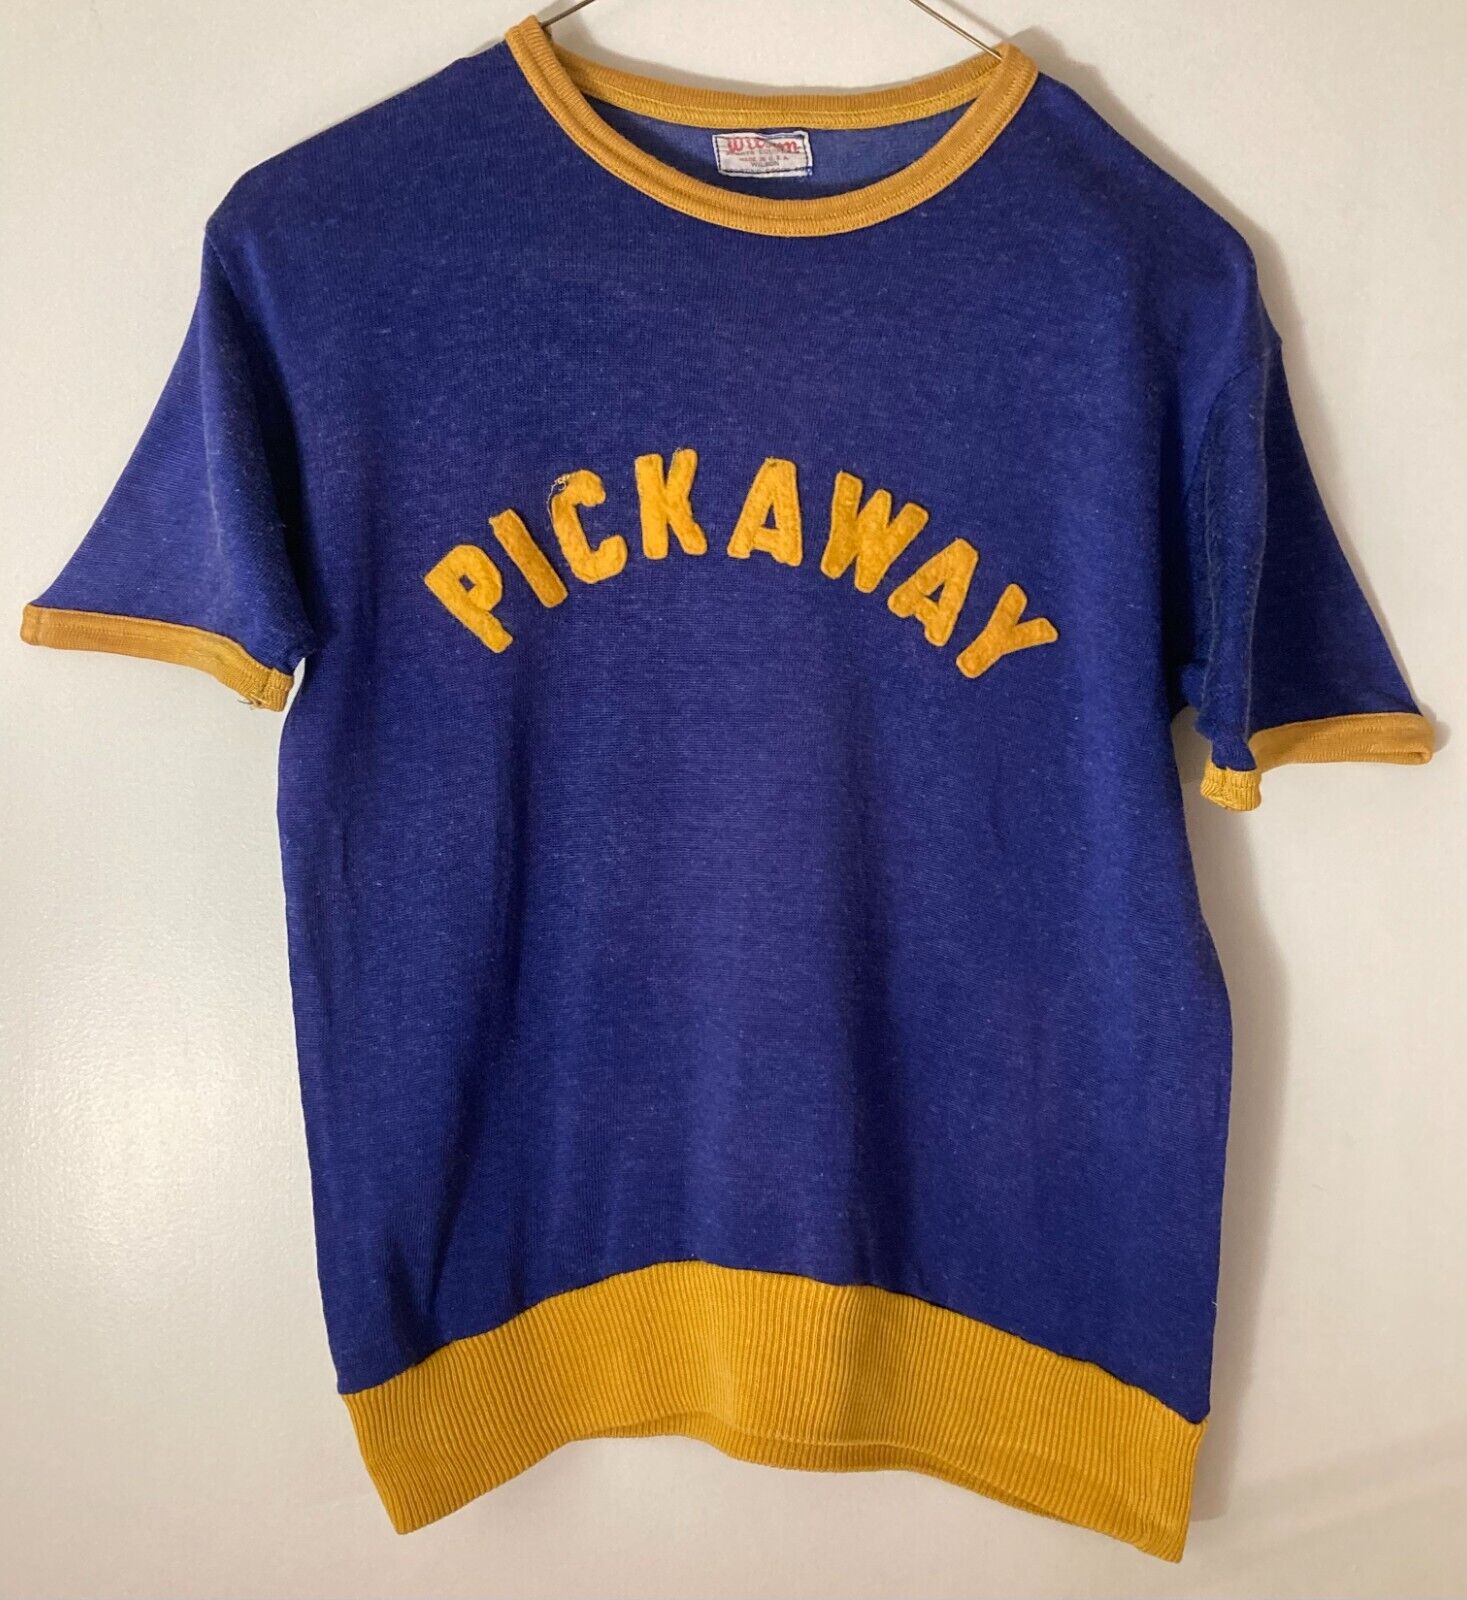 1951 U.S. Navy T-Shirt U.S.S. Pickaway / Korean War / Wilson Sports / Size S